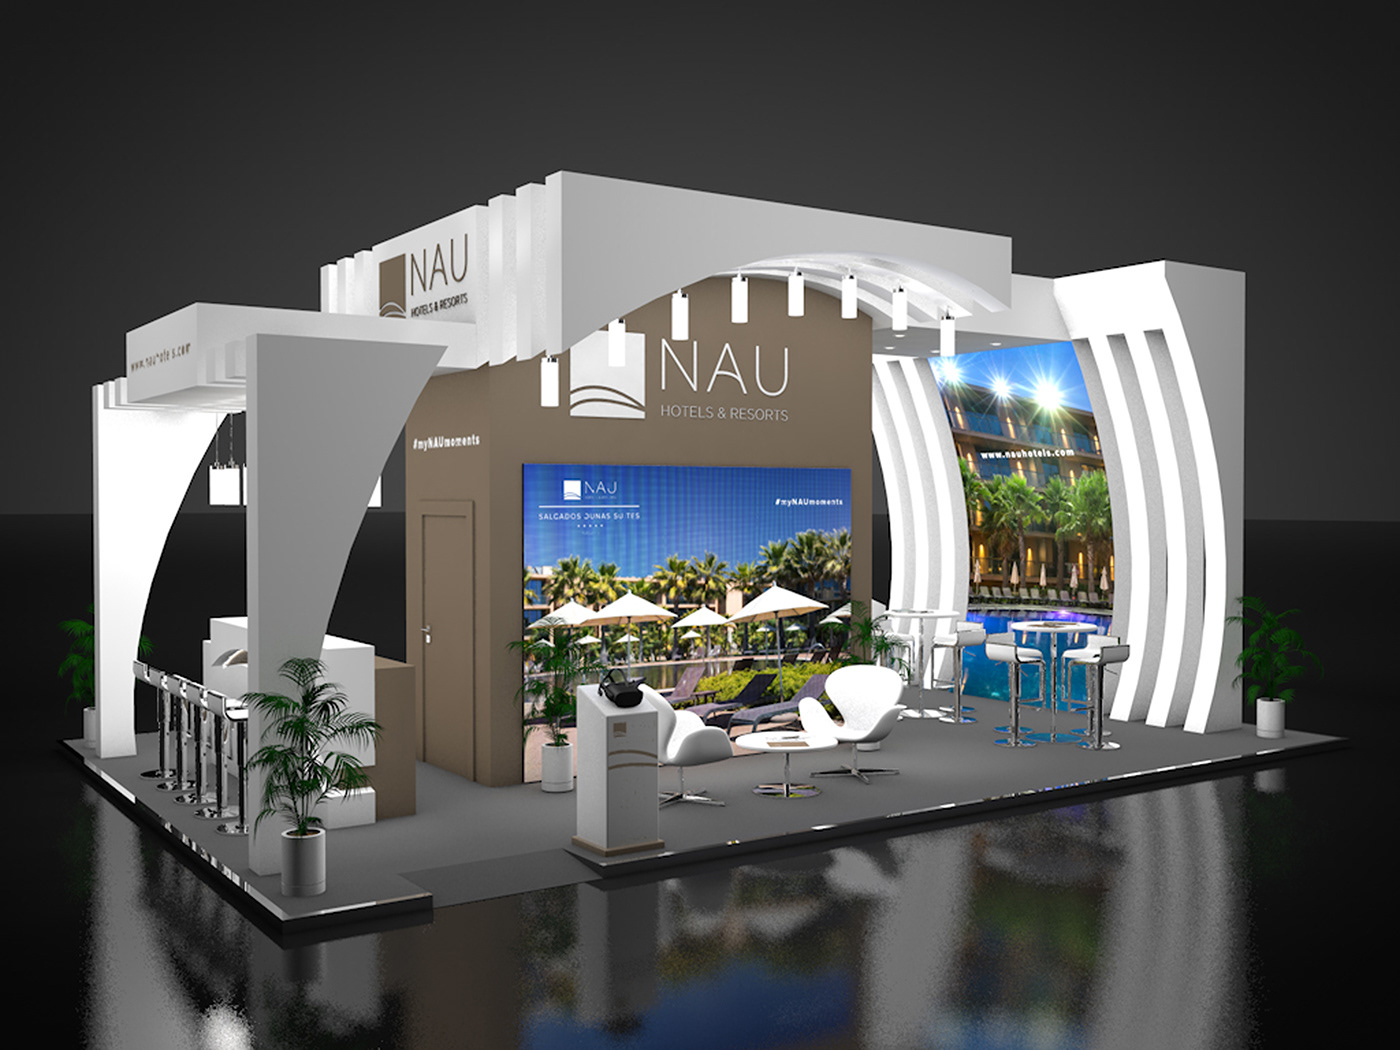 Event Exhibition  hotels mynaumoments nau nauhotels&resorts Resorts Roadshow Stand tradeshow